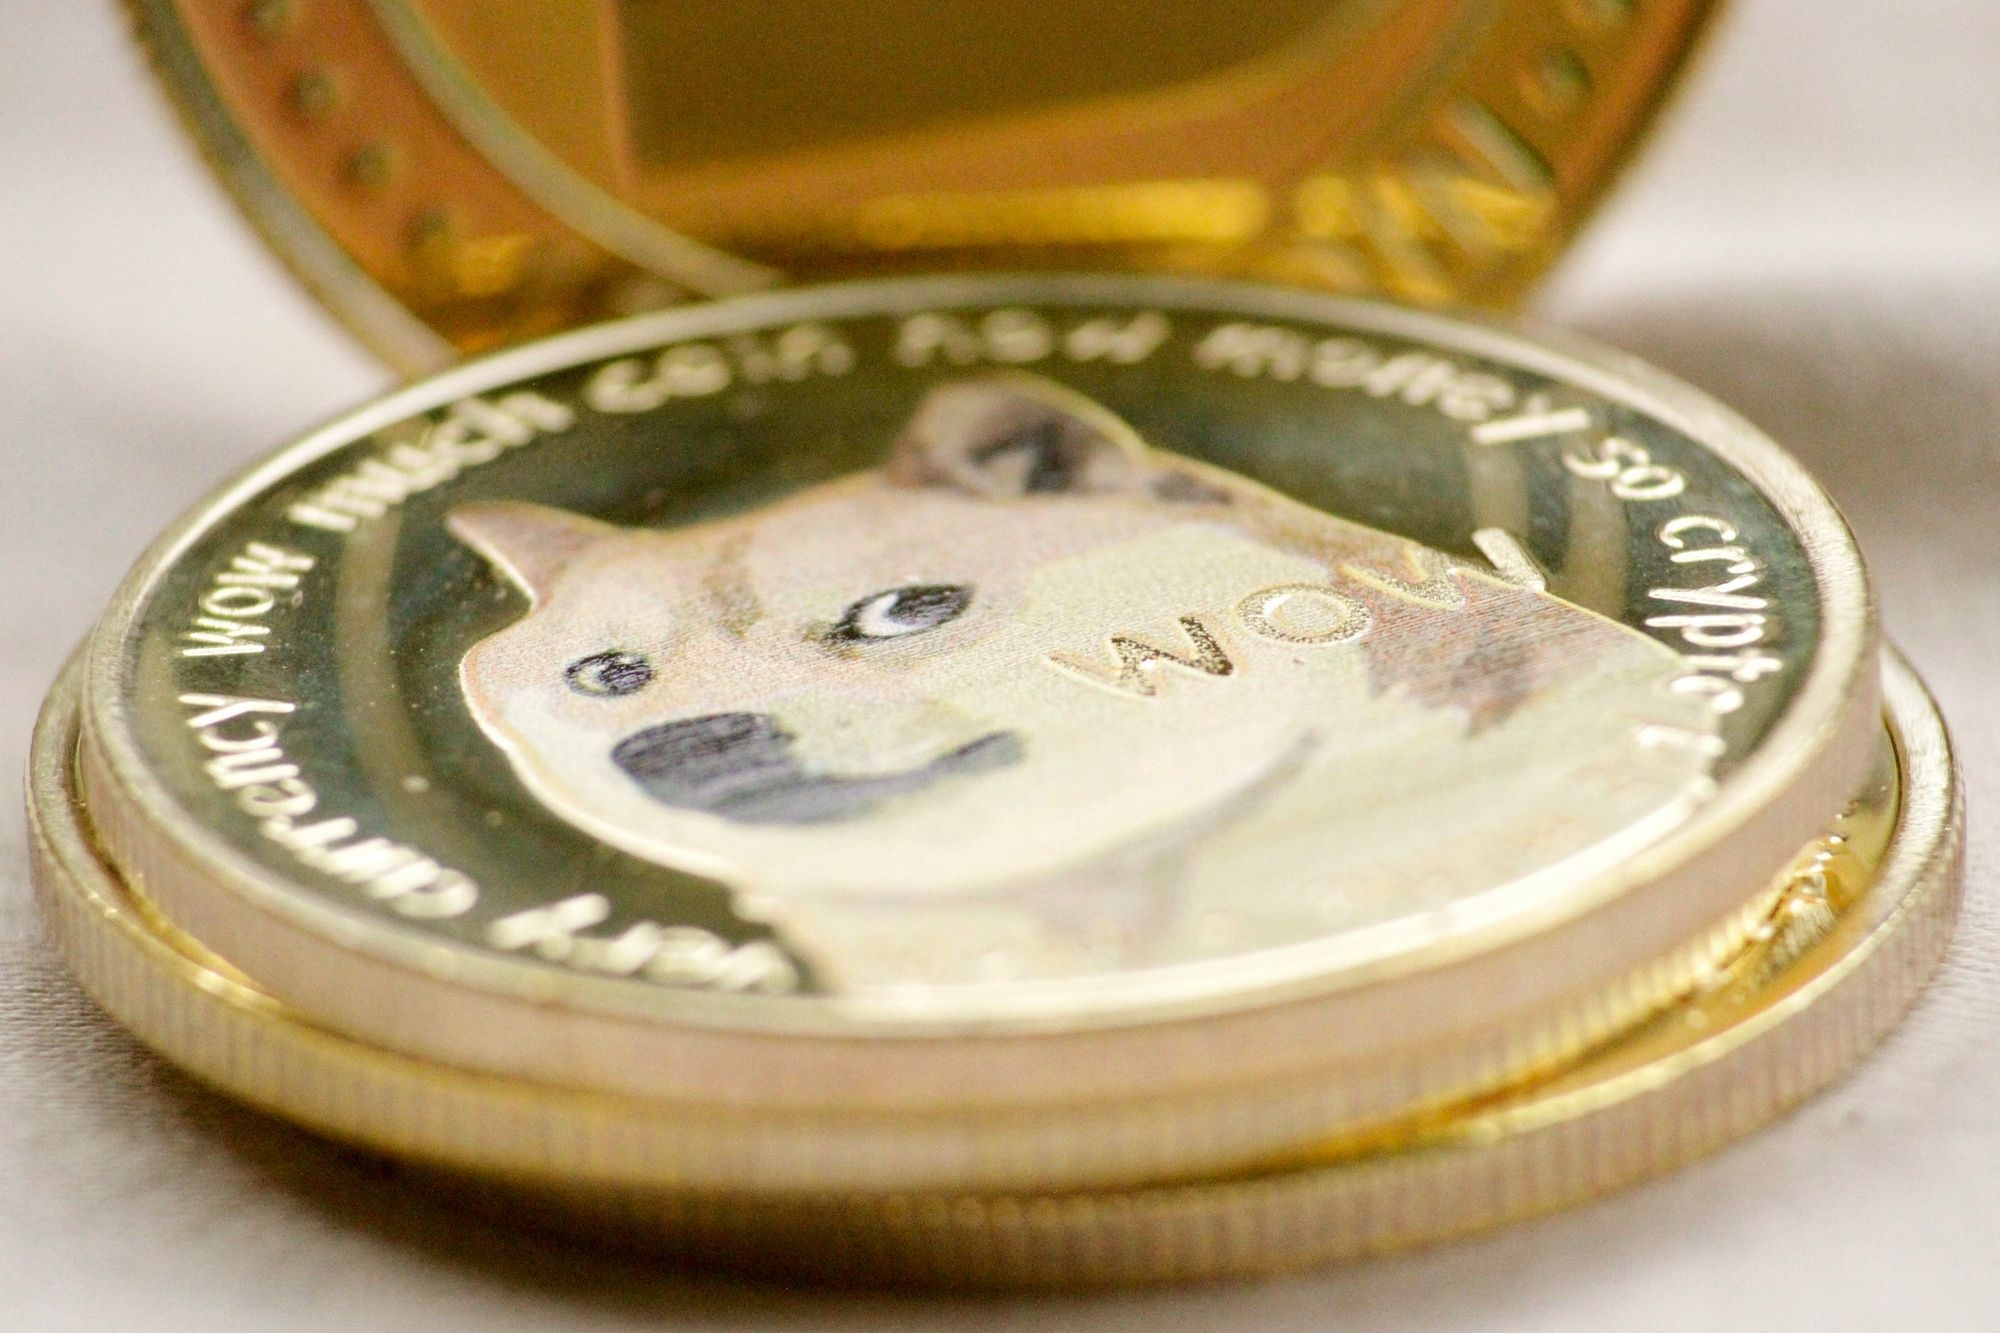 Representación de Dogecoin en forma de moneda.